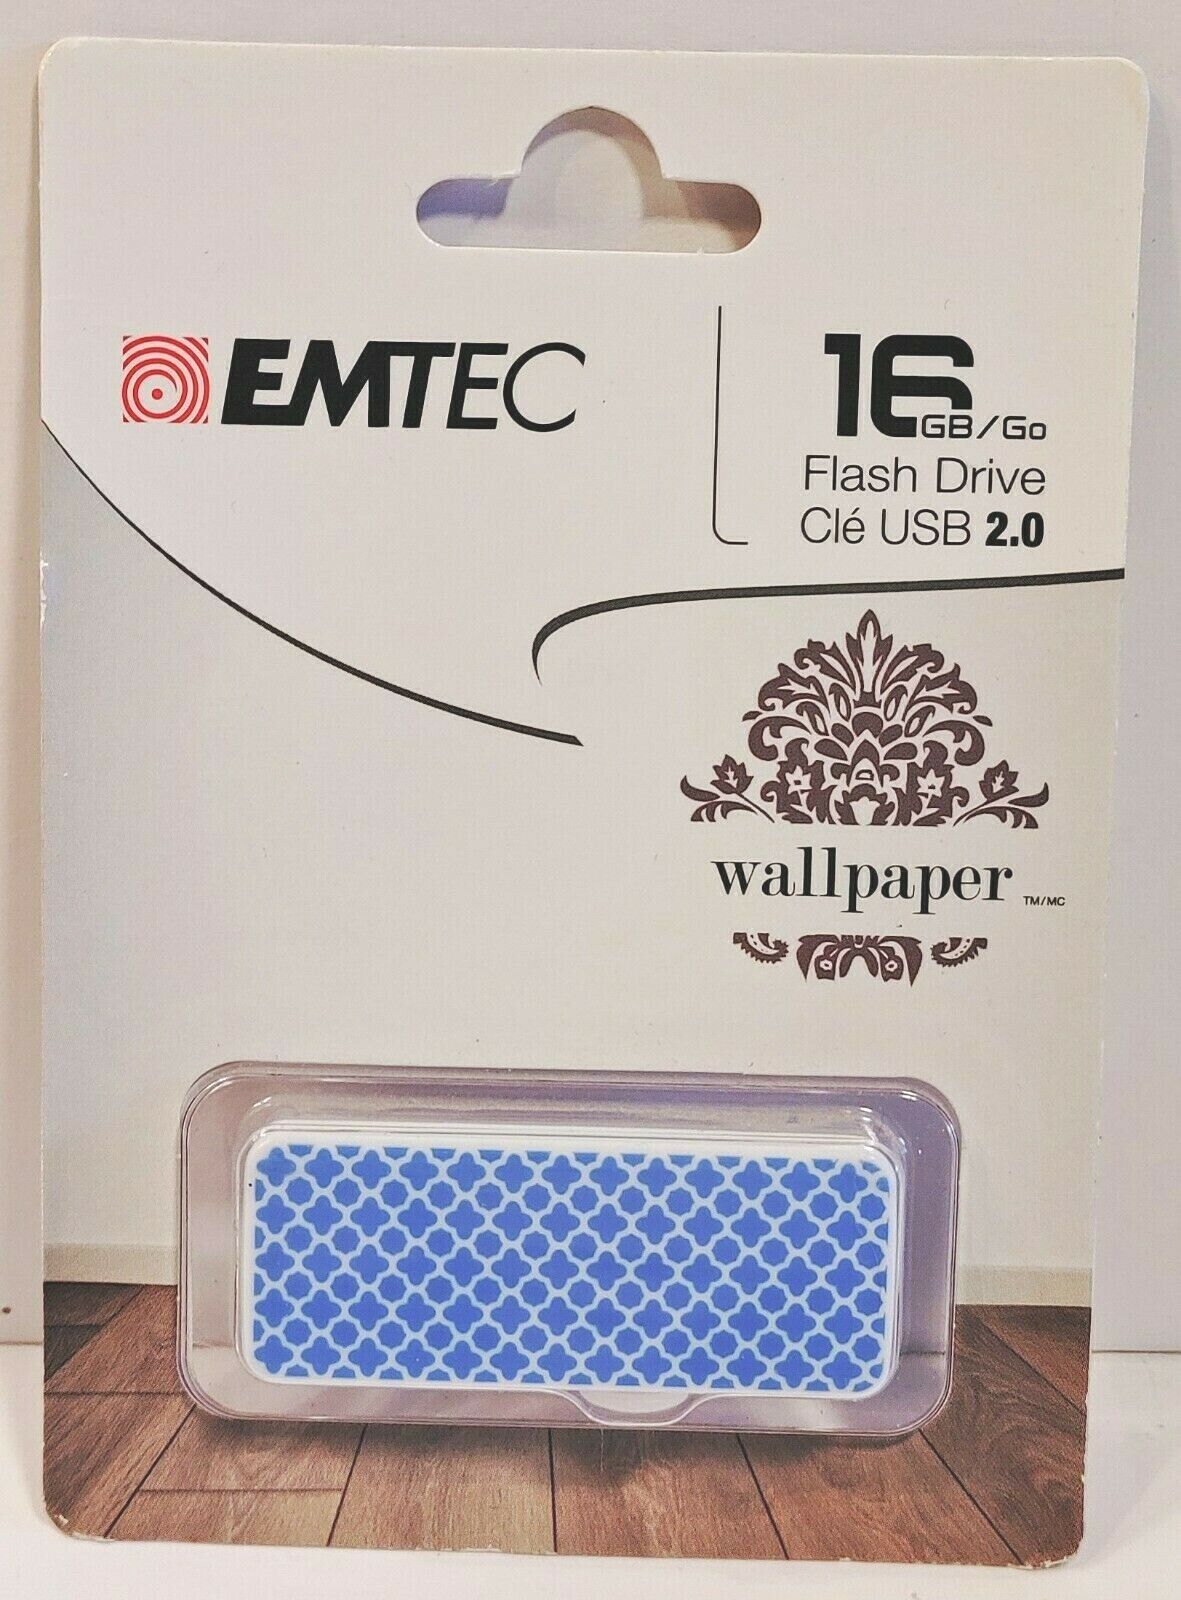 Emtec - 16 GB Flash Drive USB 2.0 Wallpaper Blue & White